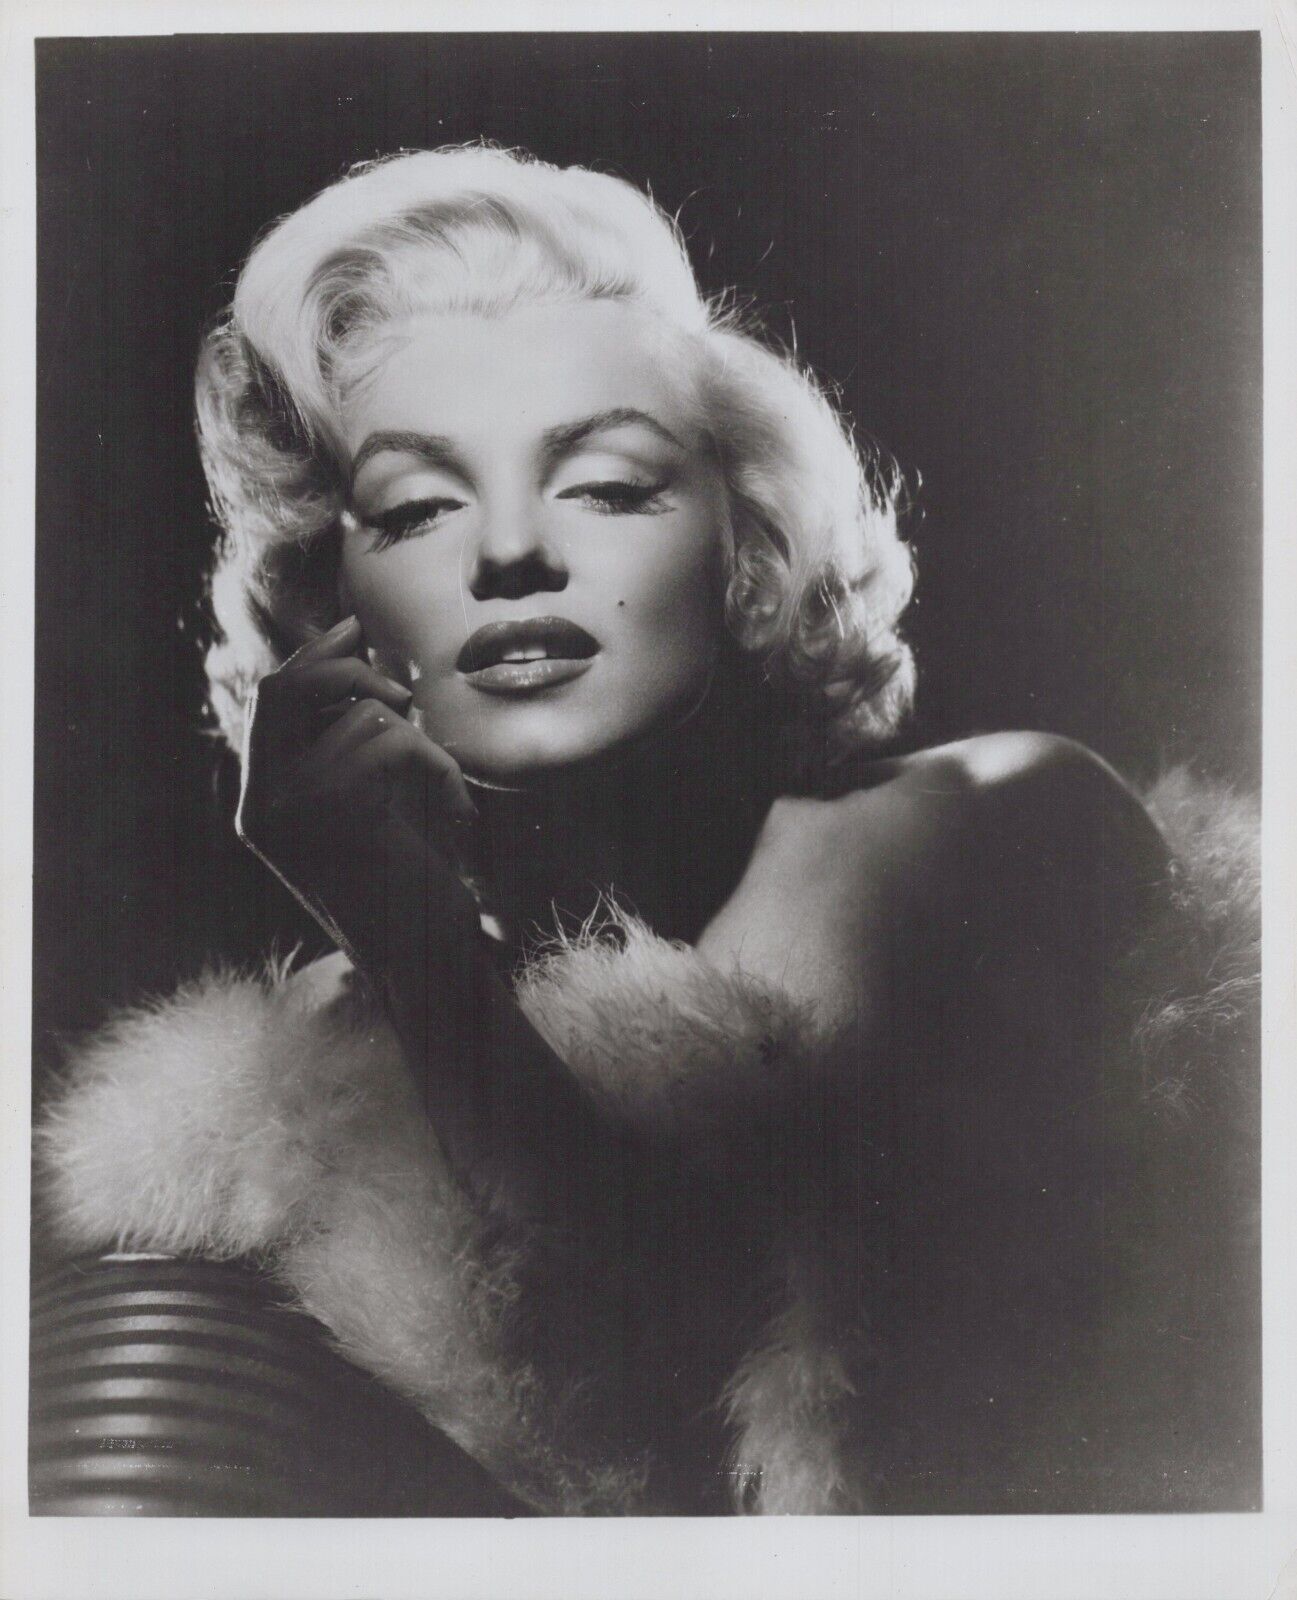 Marilyn Monroe (1960s) ❤ Hollywood Beauty - Stunning Portrait Photo K 396